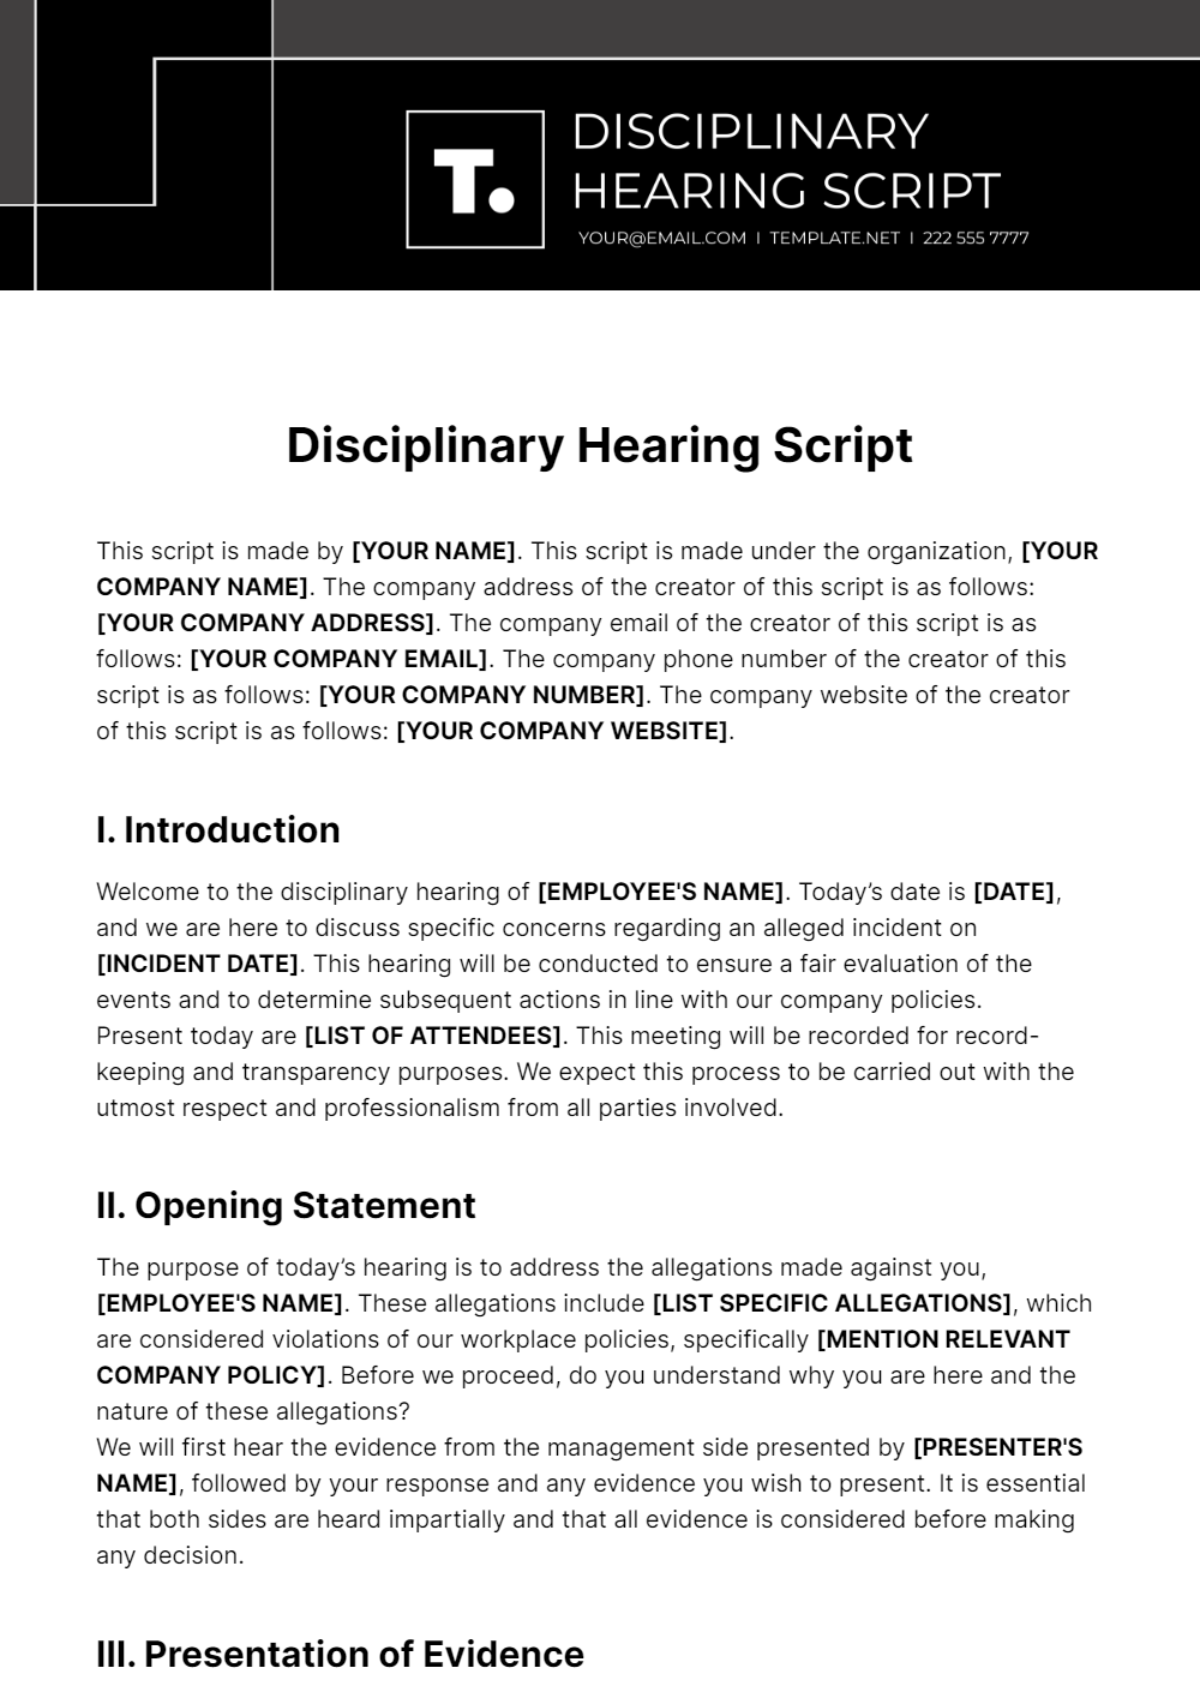 Disciplinary Hearing Script Template